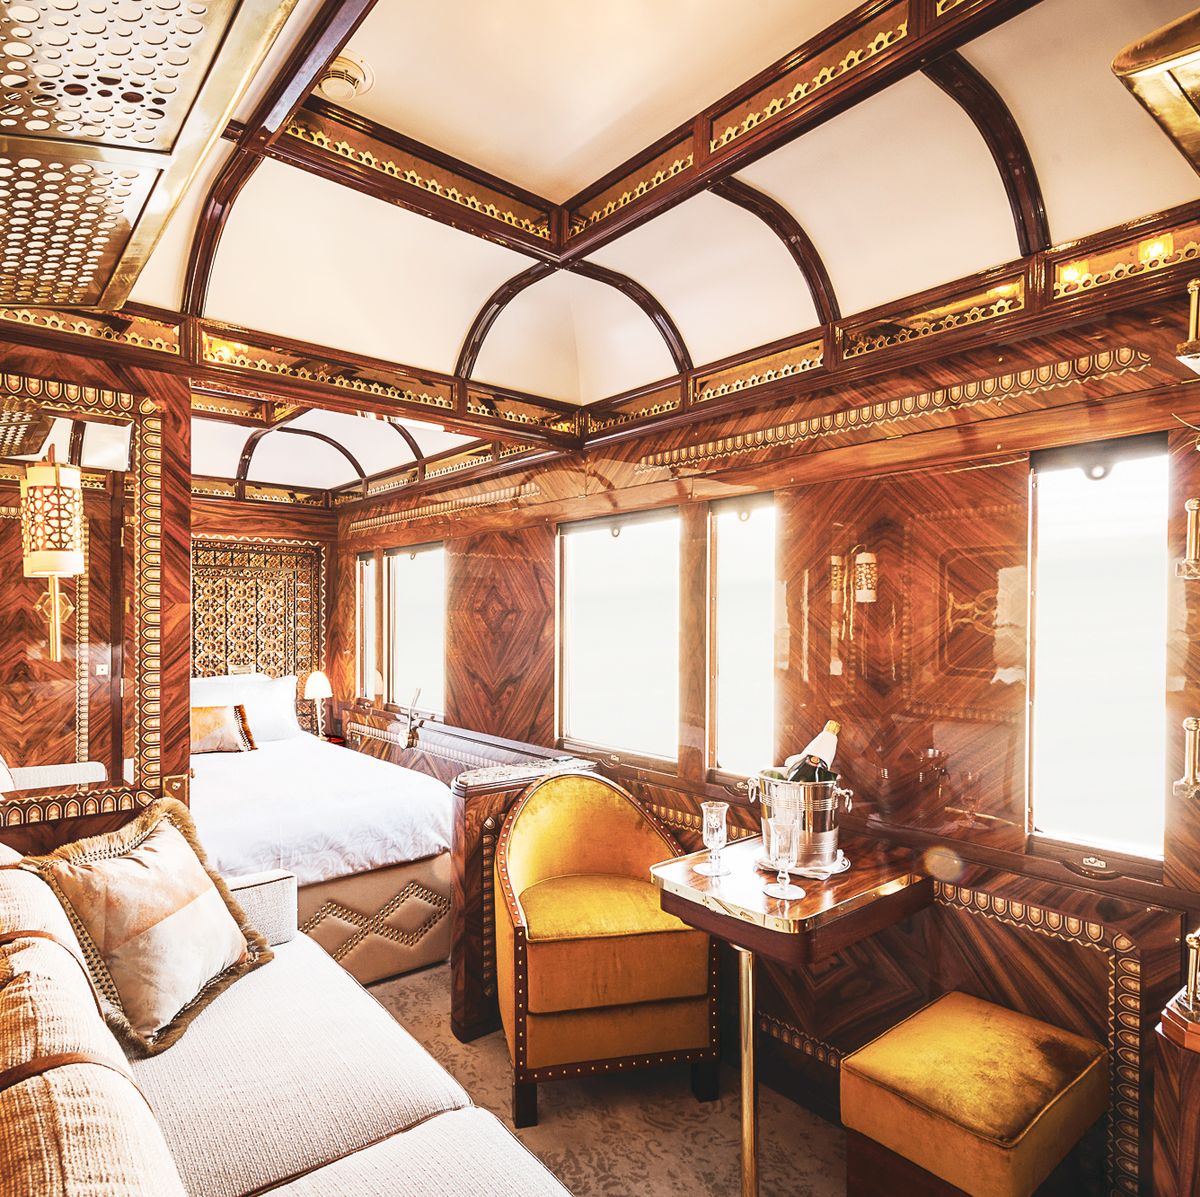 Inside the upcoming Orient Express La Dolce Vita train